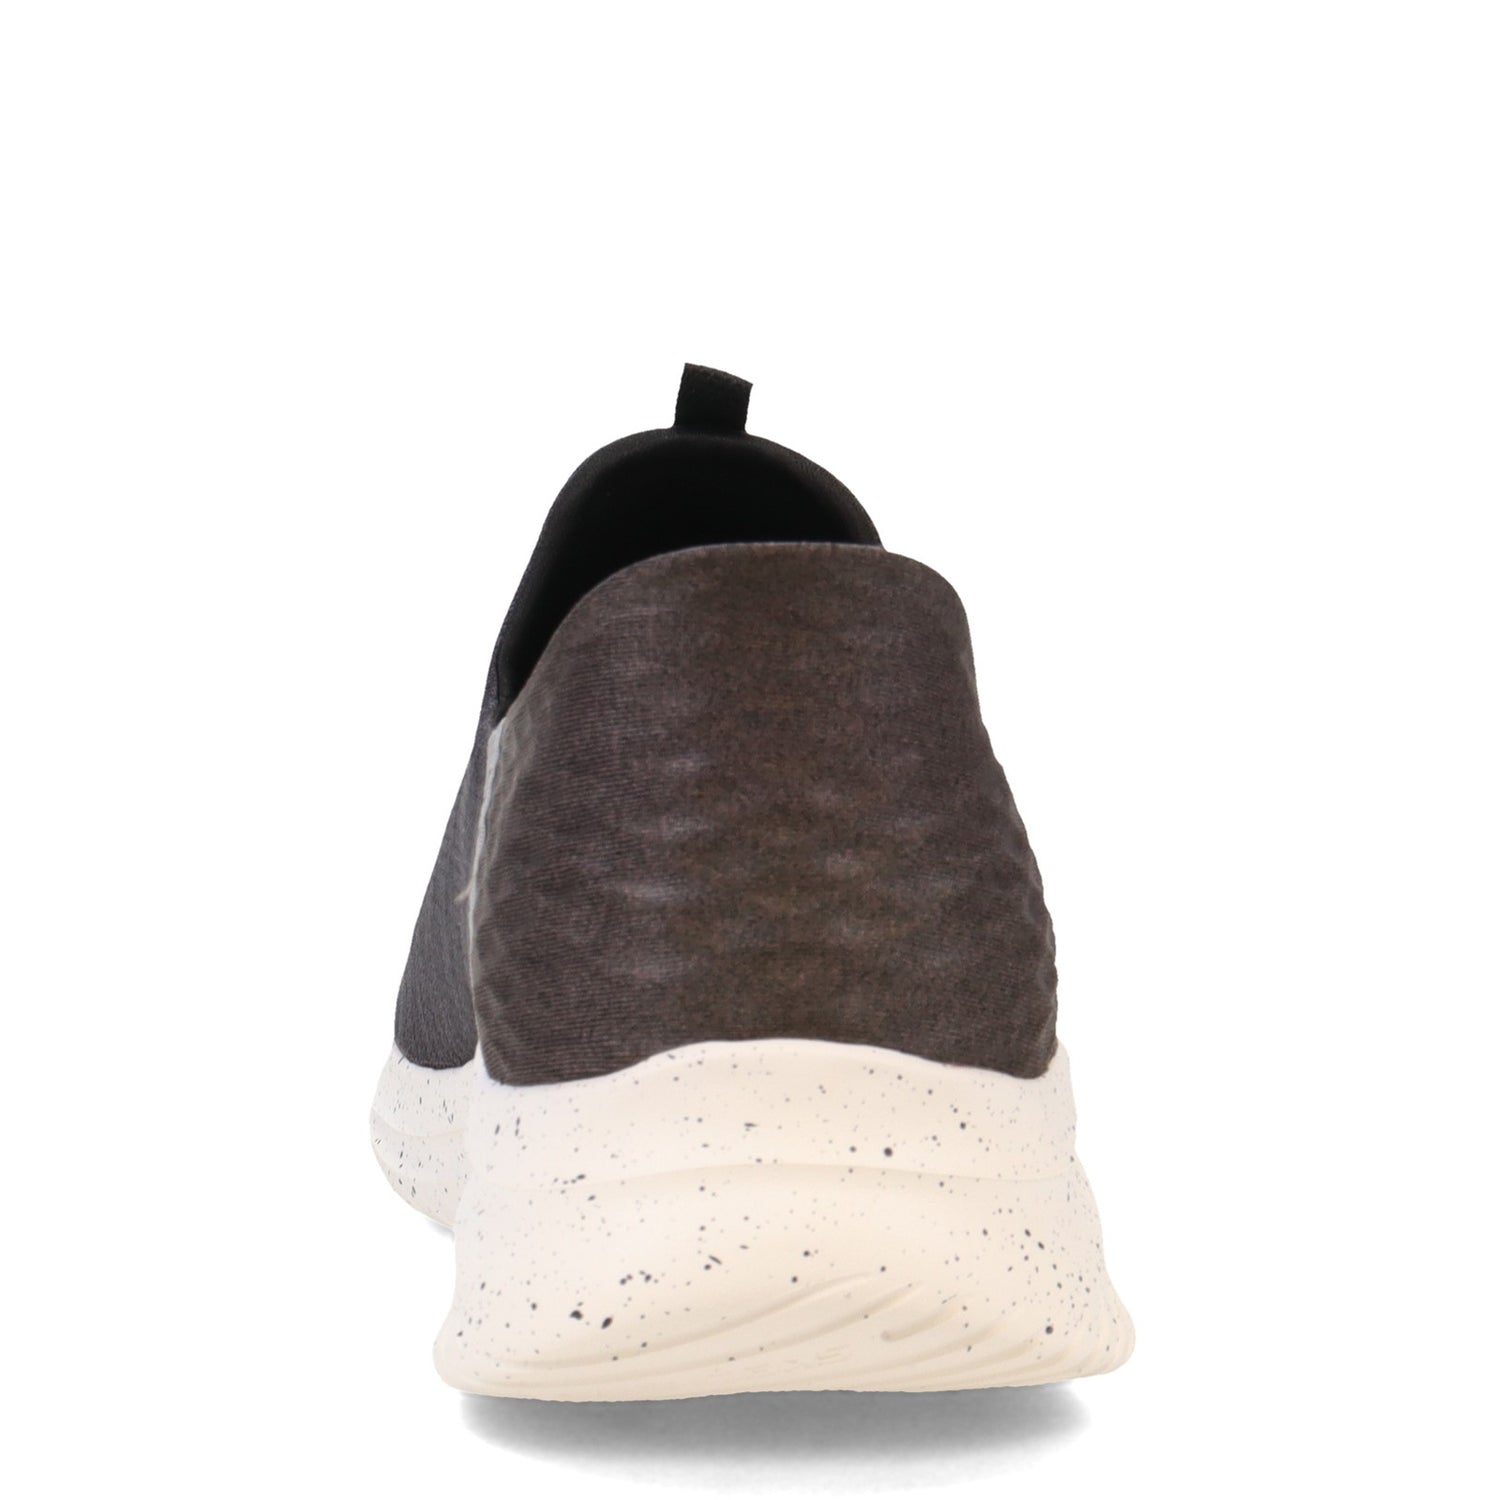 Skechers Slip-Ins Ultra Flex 3.0 Men's Wide-Width Running Shoe Grey